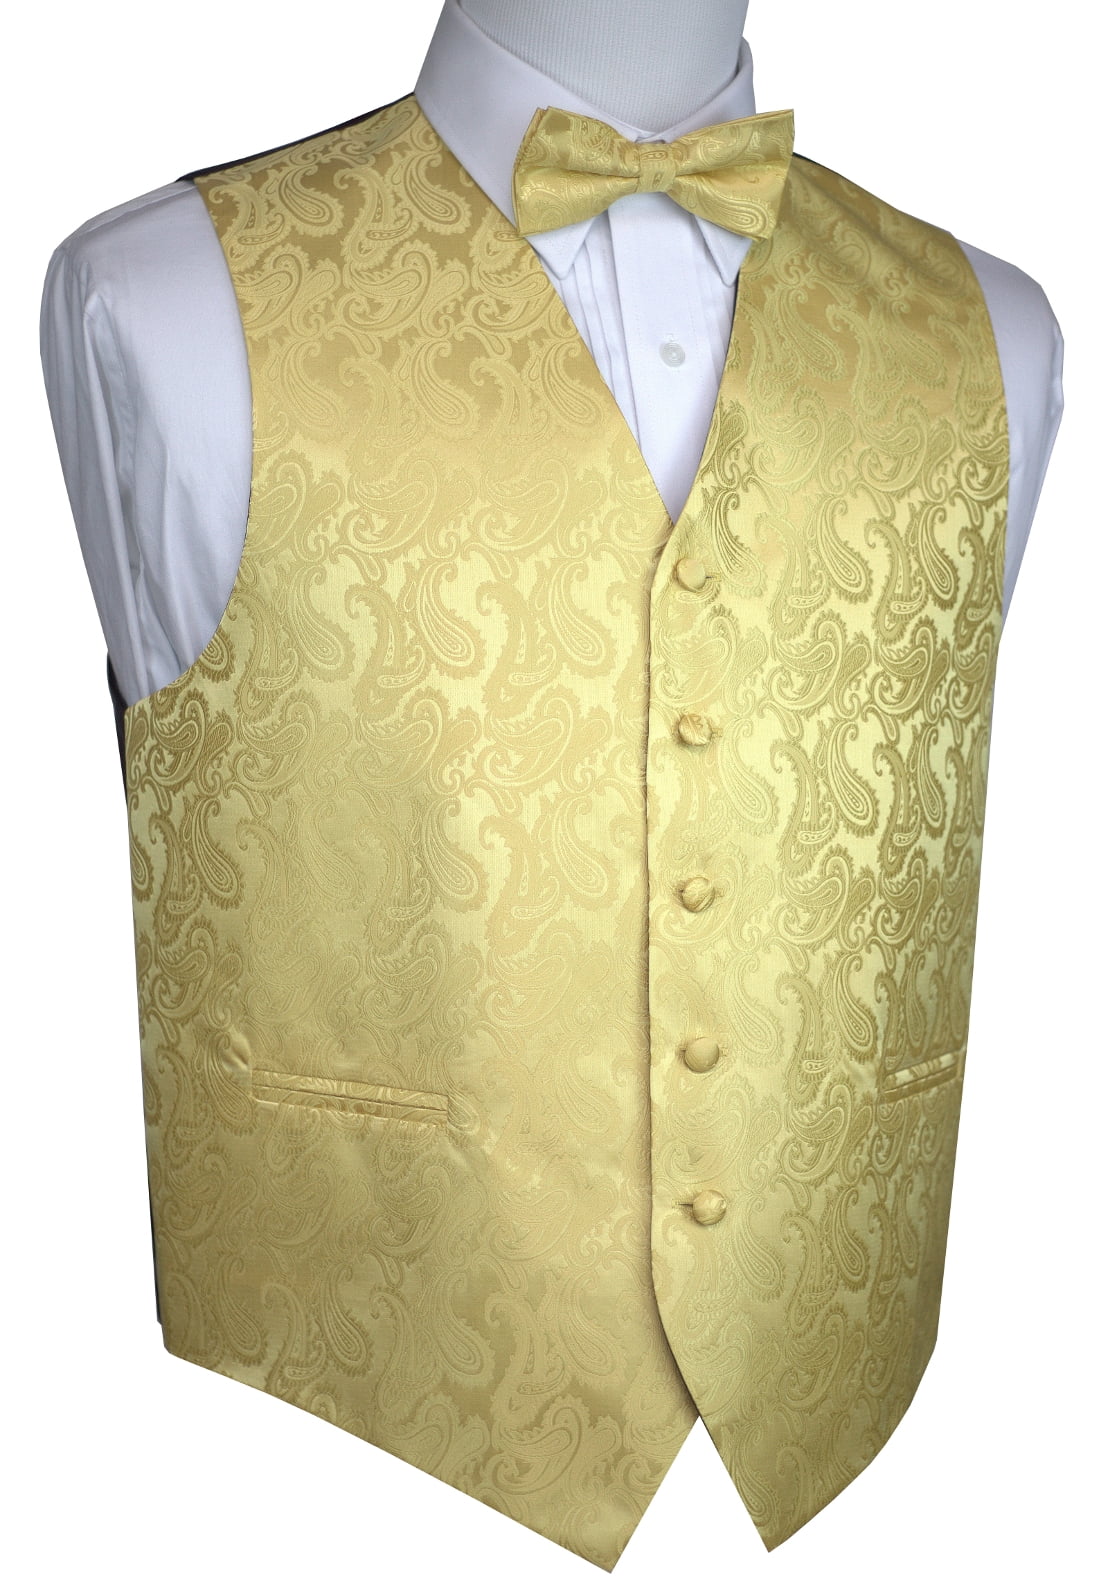 New Men's Formal Vest Tuxedo Waistcoat_2.5" necktie set paisley prom Dark gray 